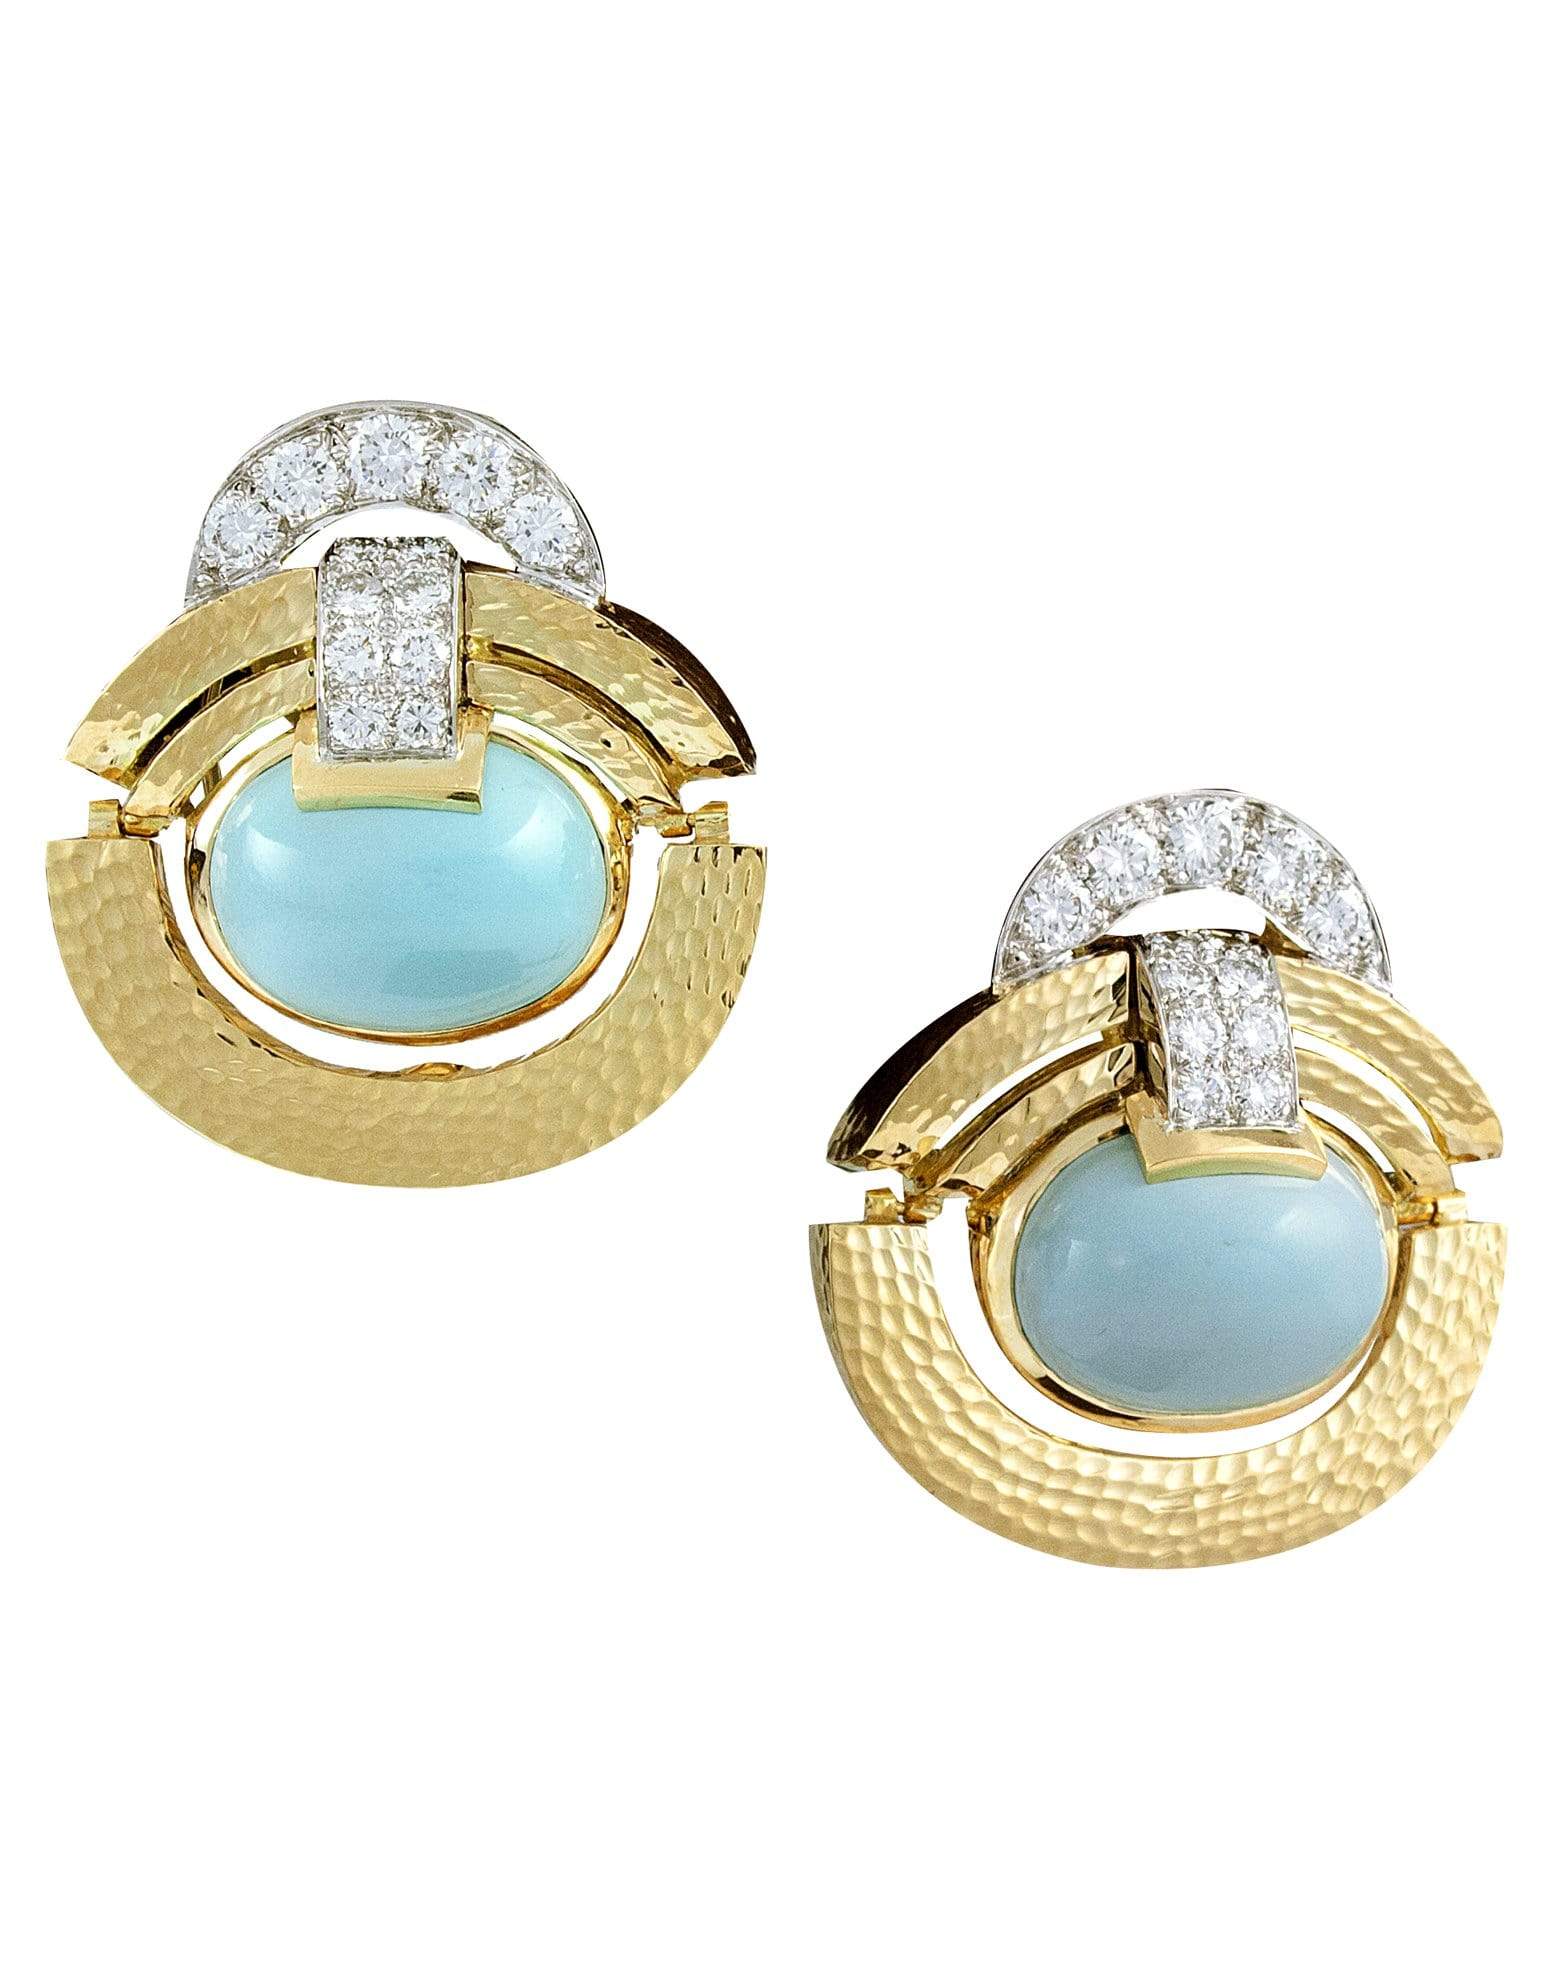 DAVID WEBB-Doorknocker Turquoise and Diamond Earrings-YELLOW GOLD